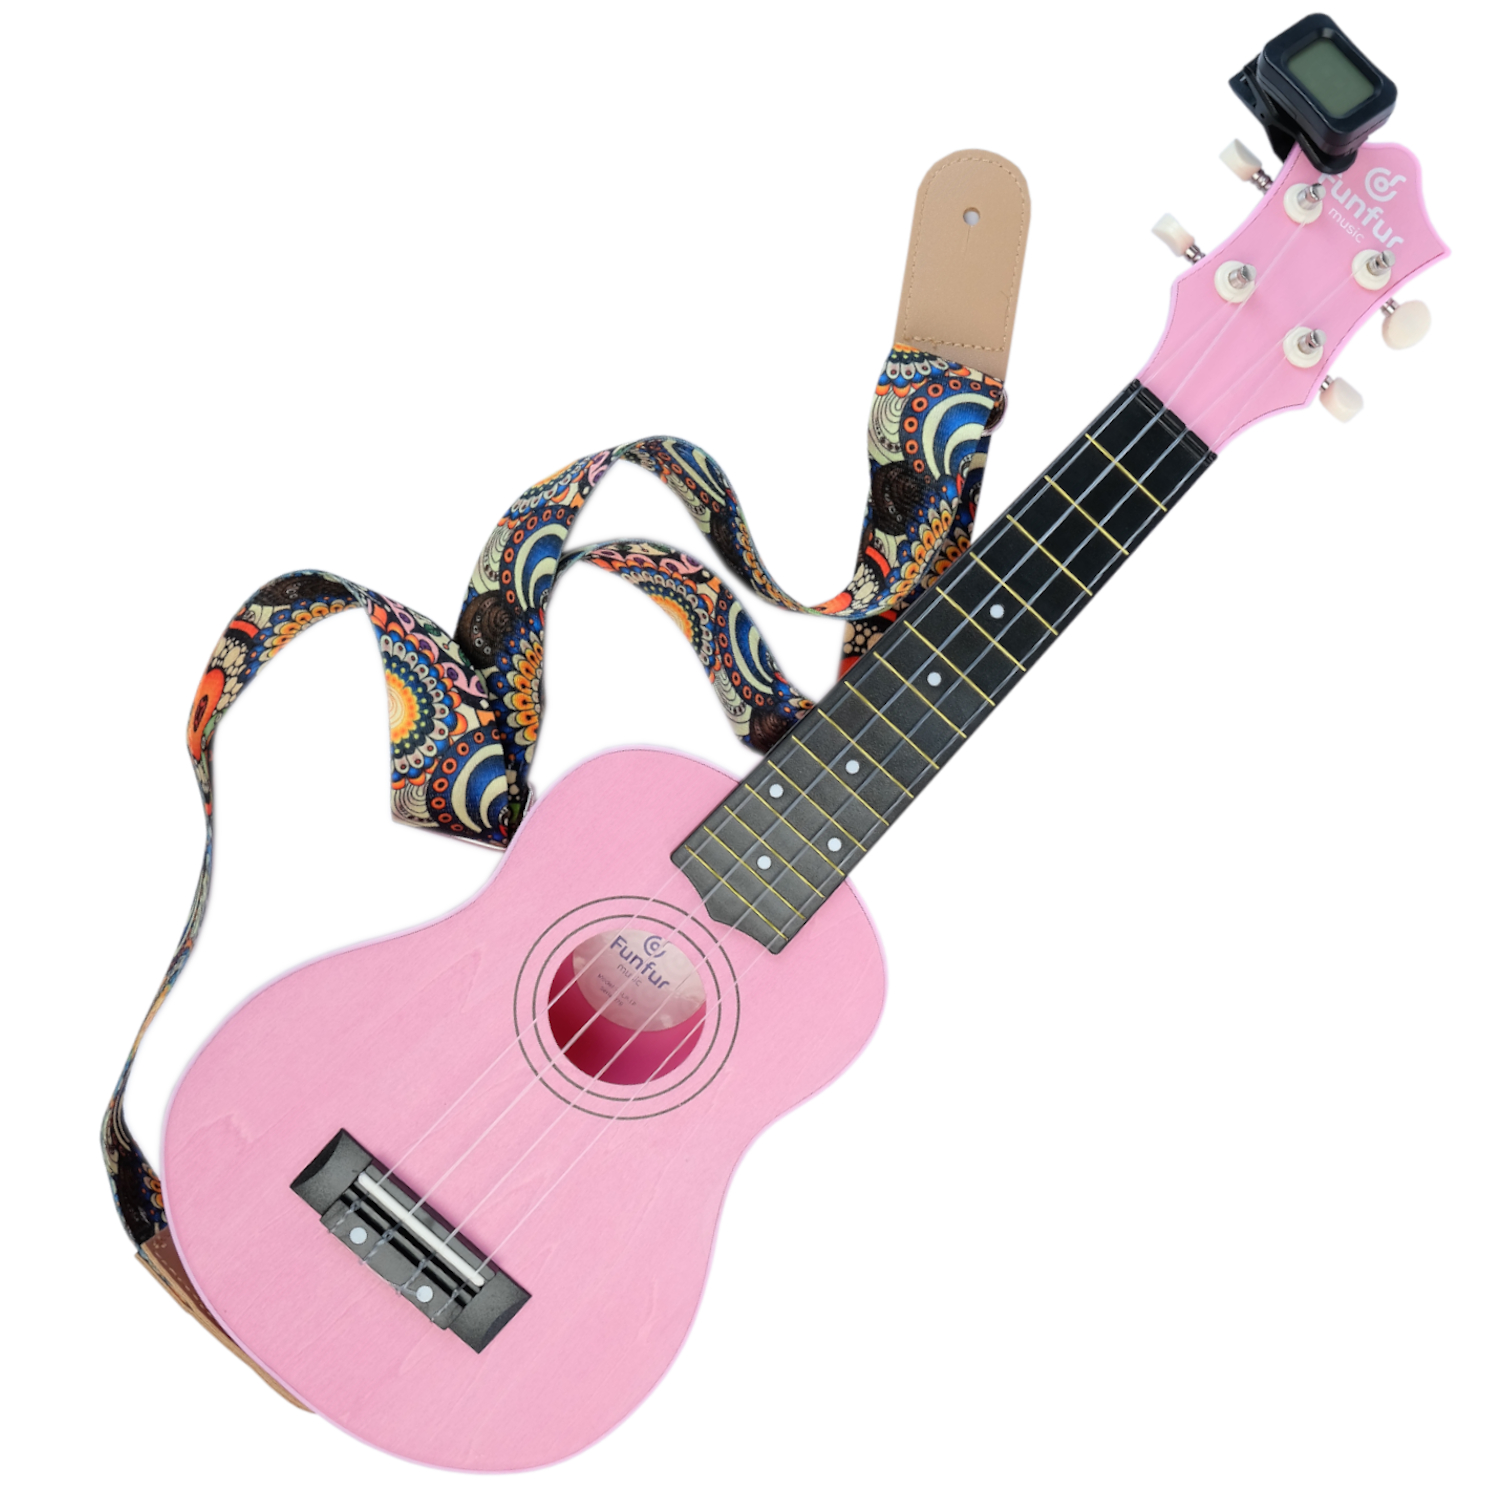 Укулеле Funfur Music Сопрано пластик/дерево розовый комплект - фото 1